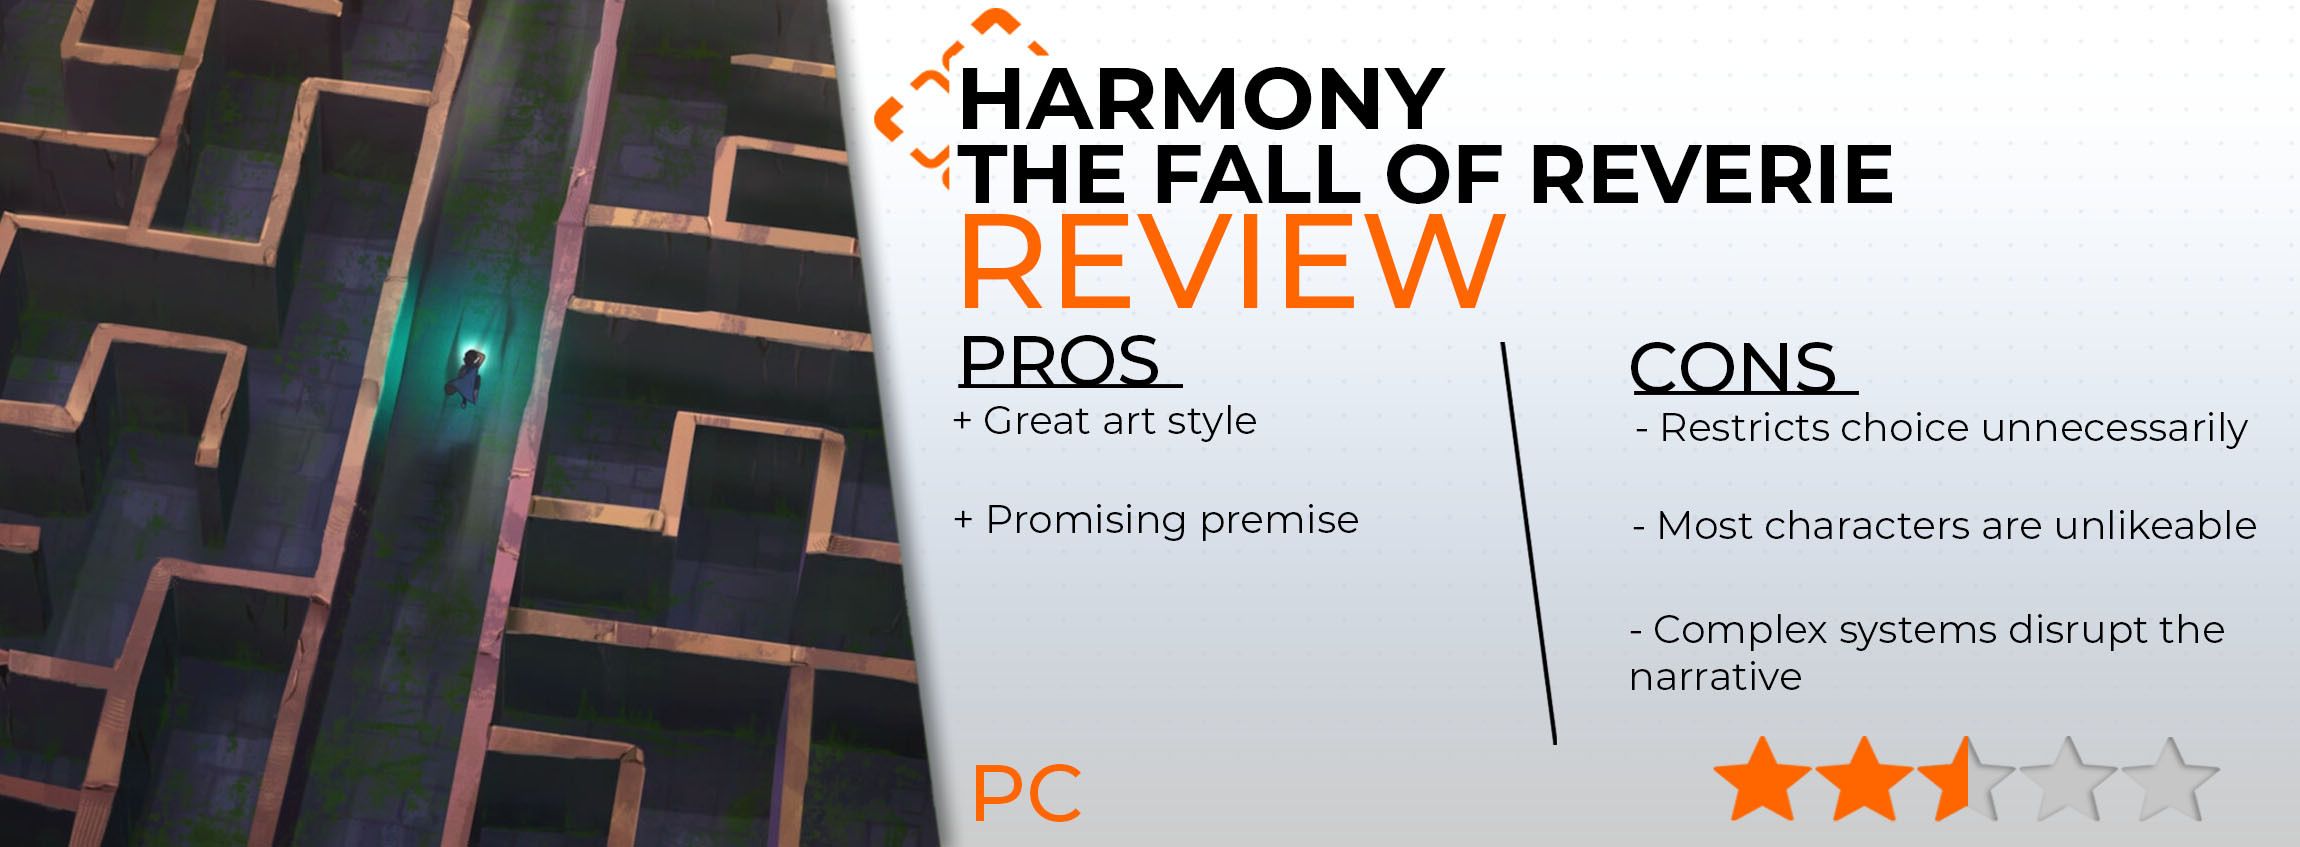 Harmony rating 2.5/5